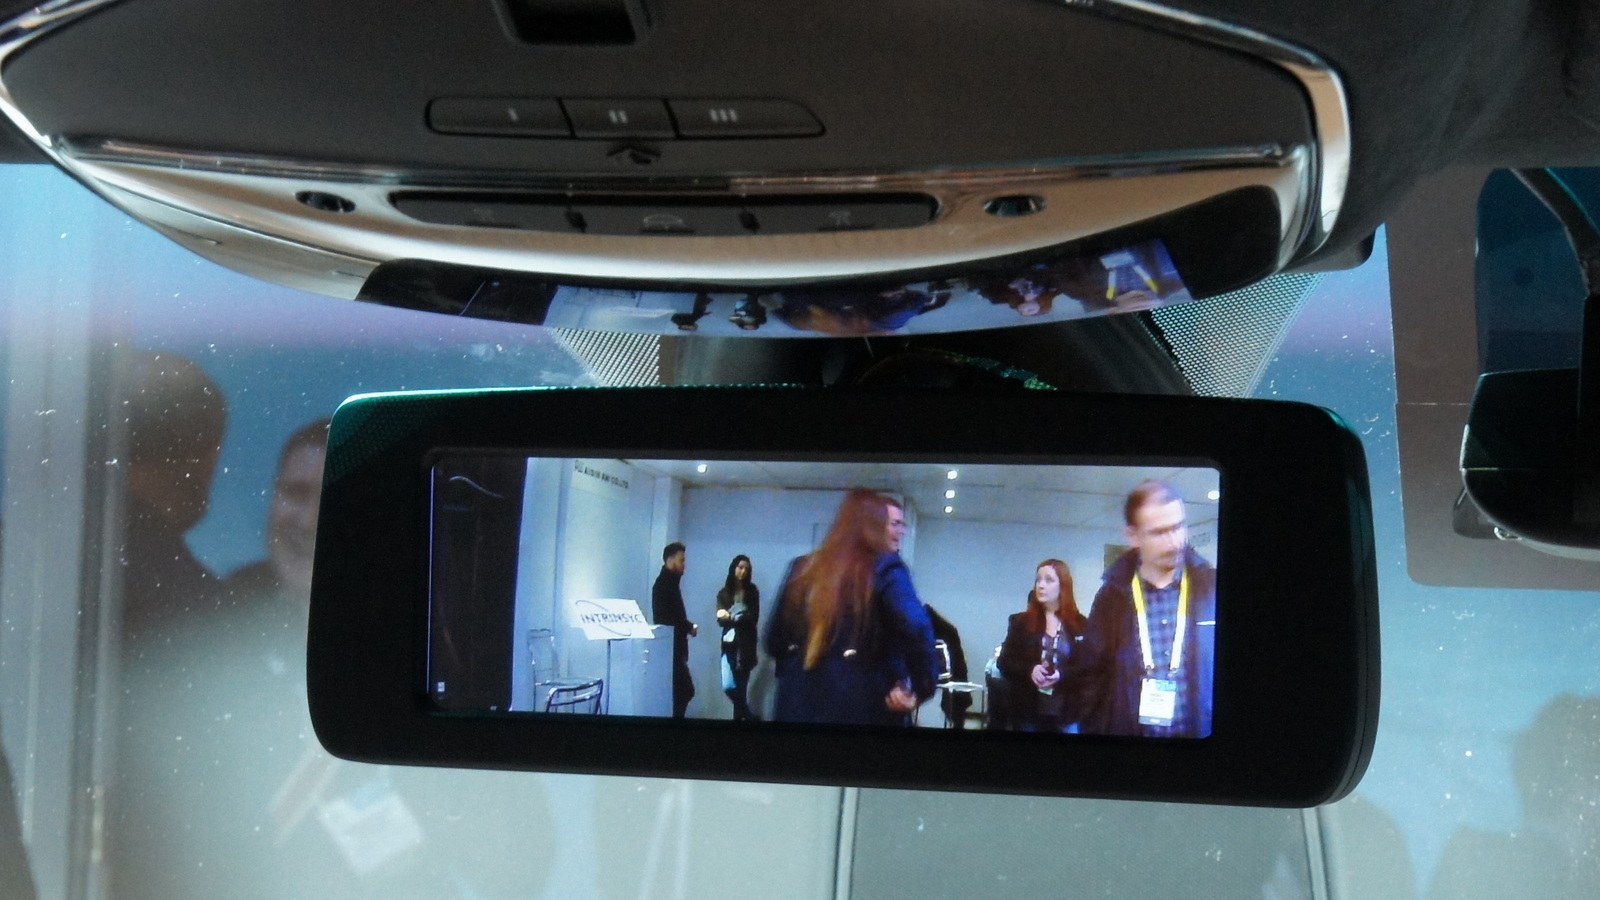 Qualcomm concept car rear view mirror